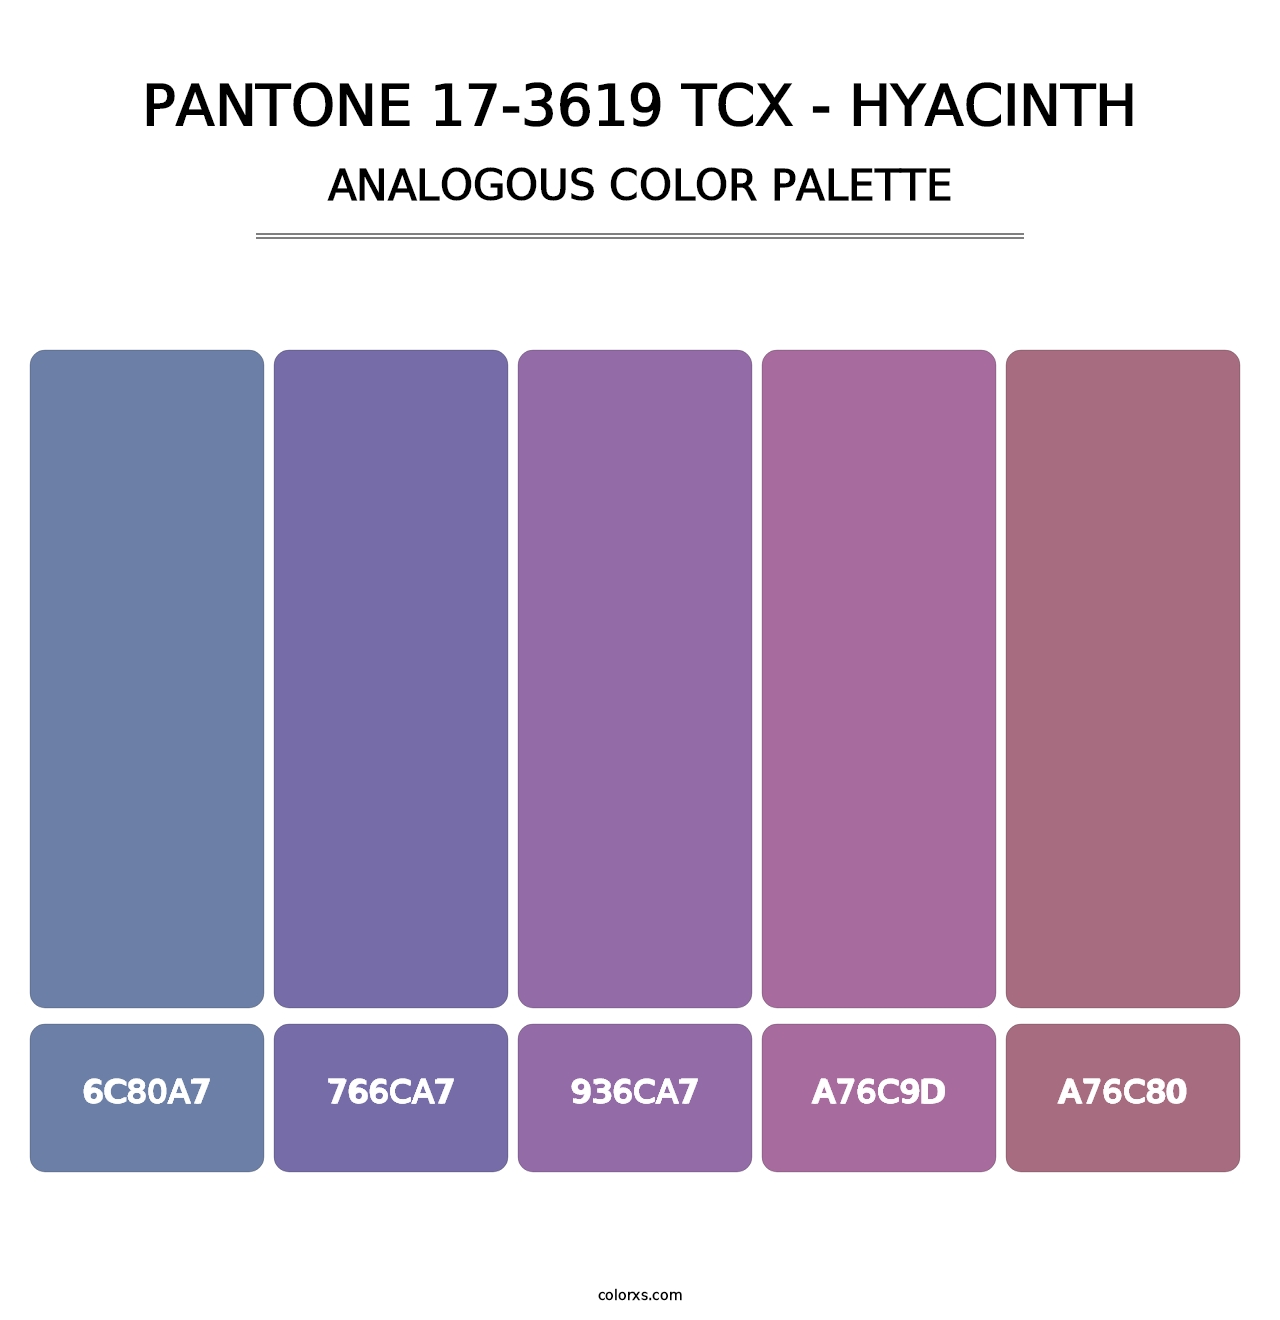 PANTONE 17-3619 TCX - Hyacinth - Analogous Color Palette